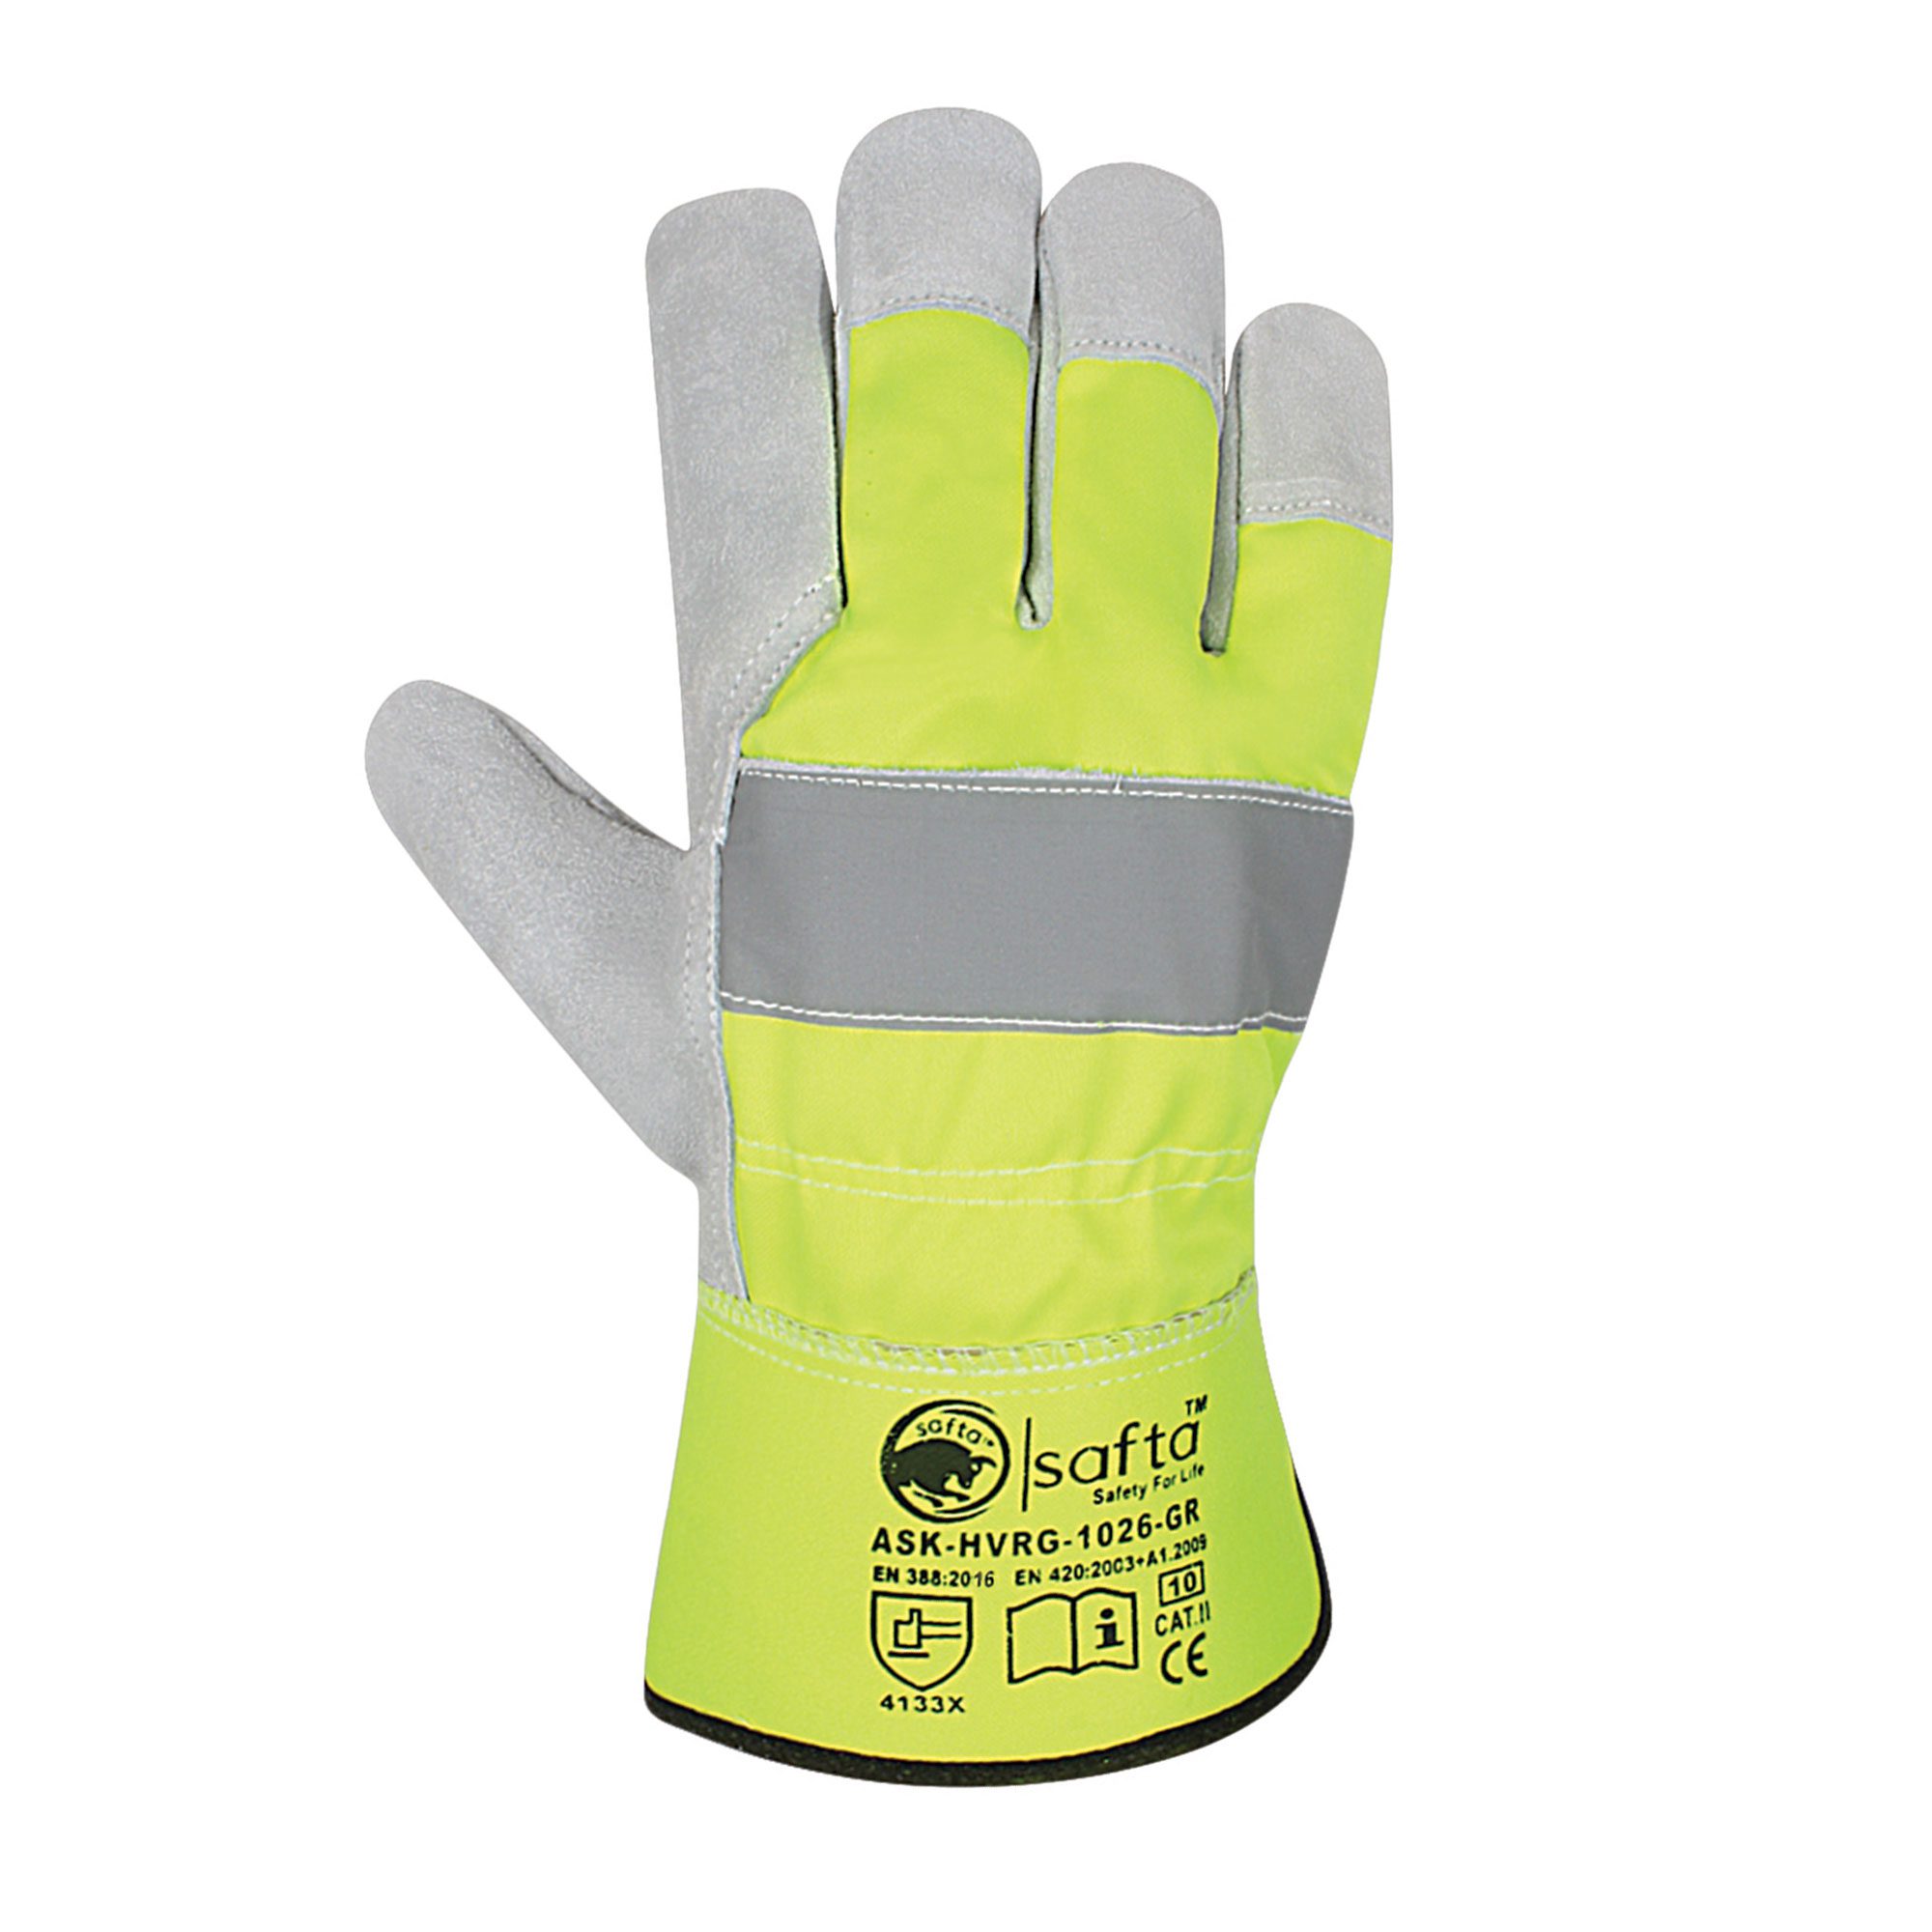 Good Quality Rigger Work Gloves FREE POST UK 